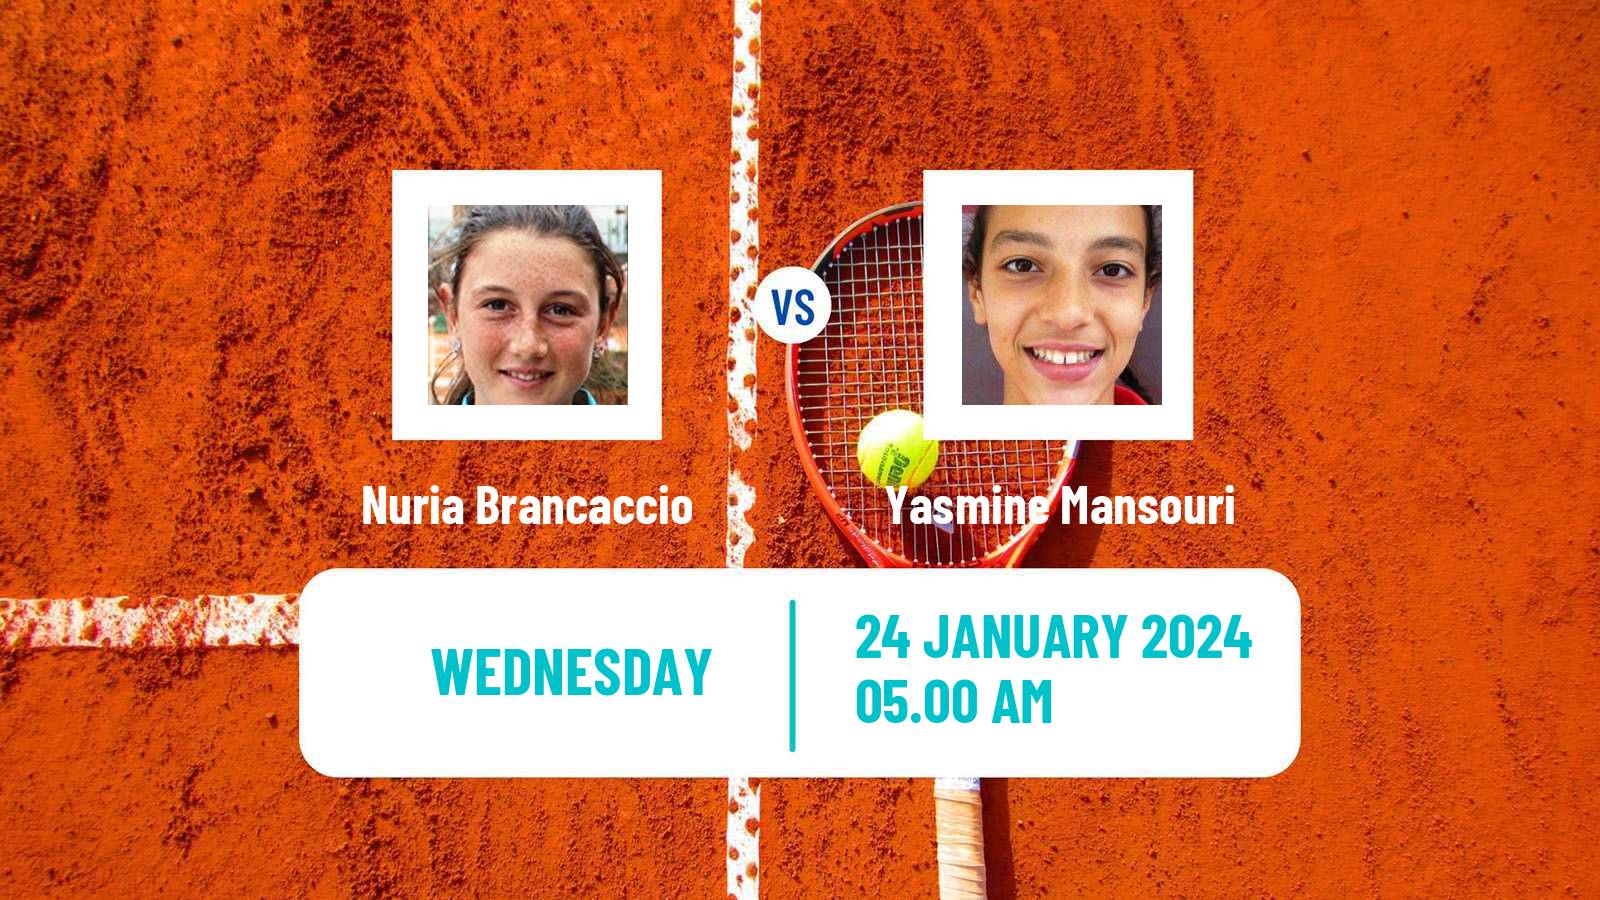 Tennis ITF W35 Monastir 2 Women Nuria Brancaccio - Yasmine Mansouri